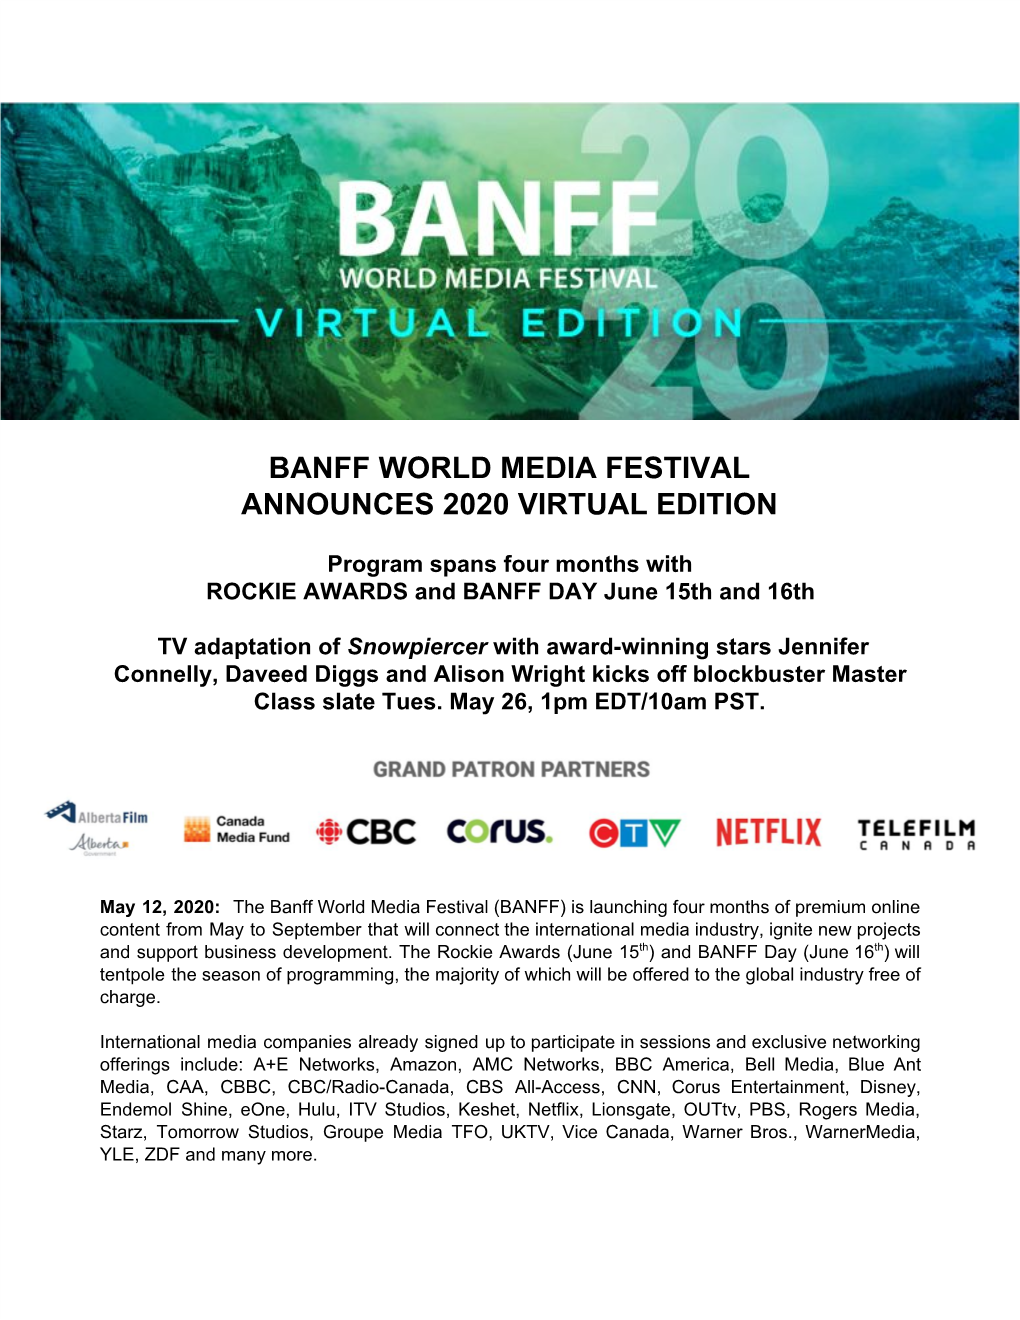 Banff World Media Festival Announces 2020 Virtual Edition